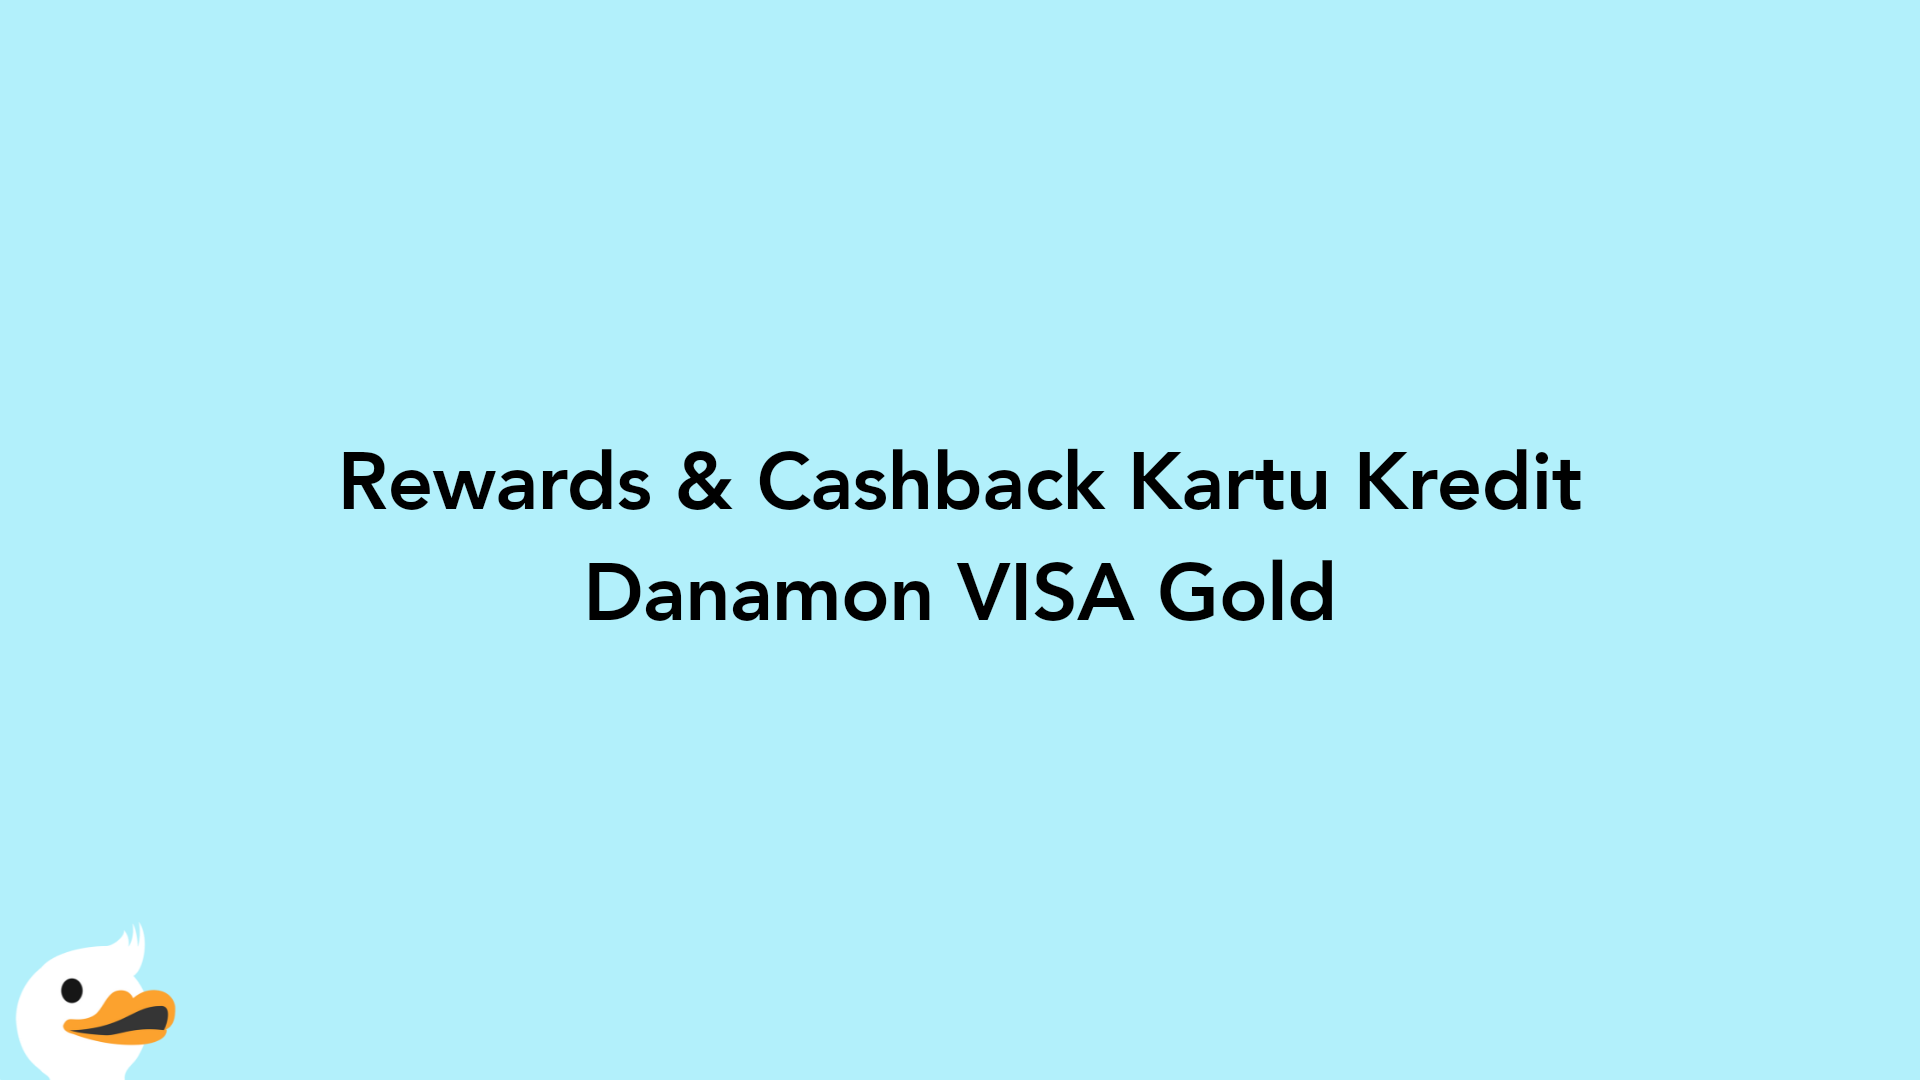 Rewards & Cashback Kartu Kredit Danamon VISA Gold